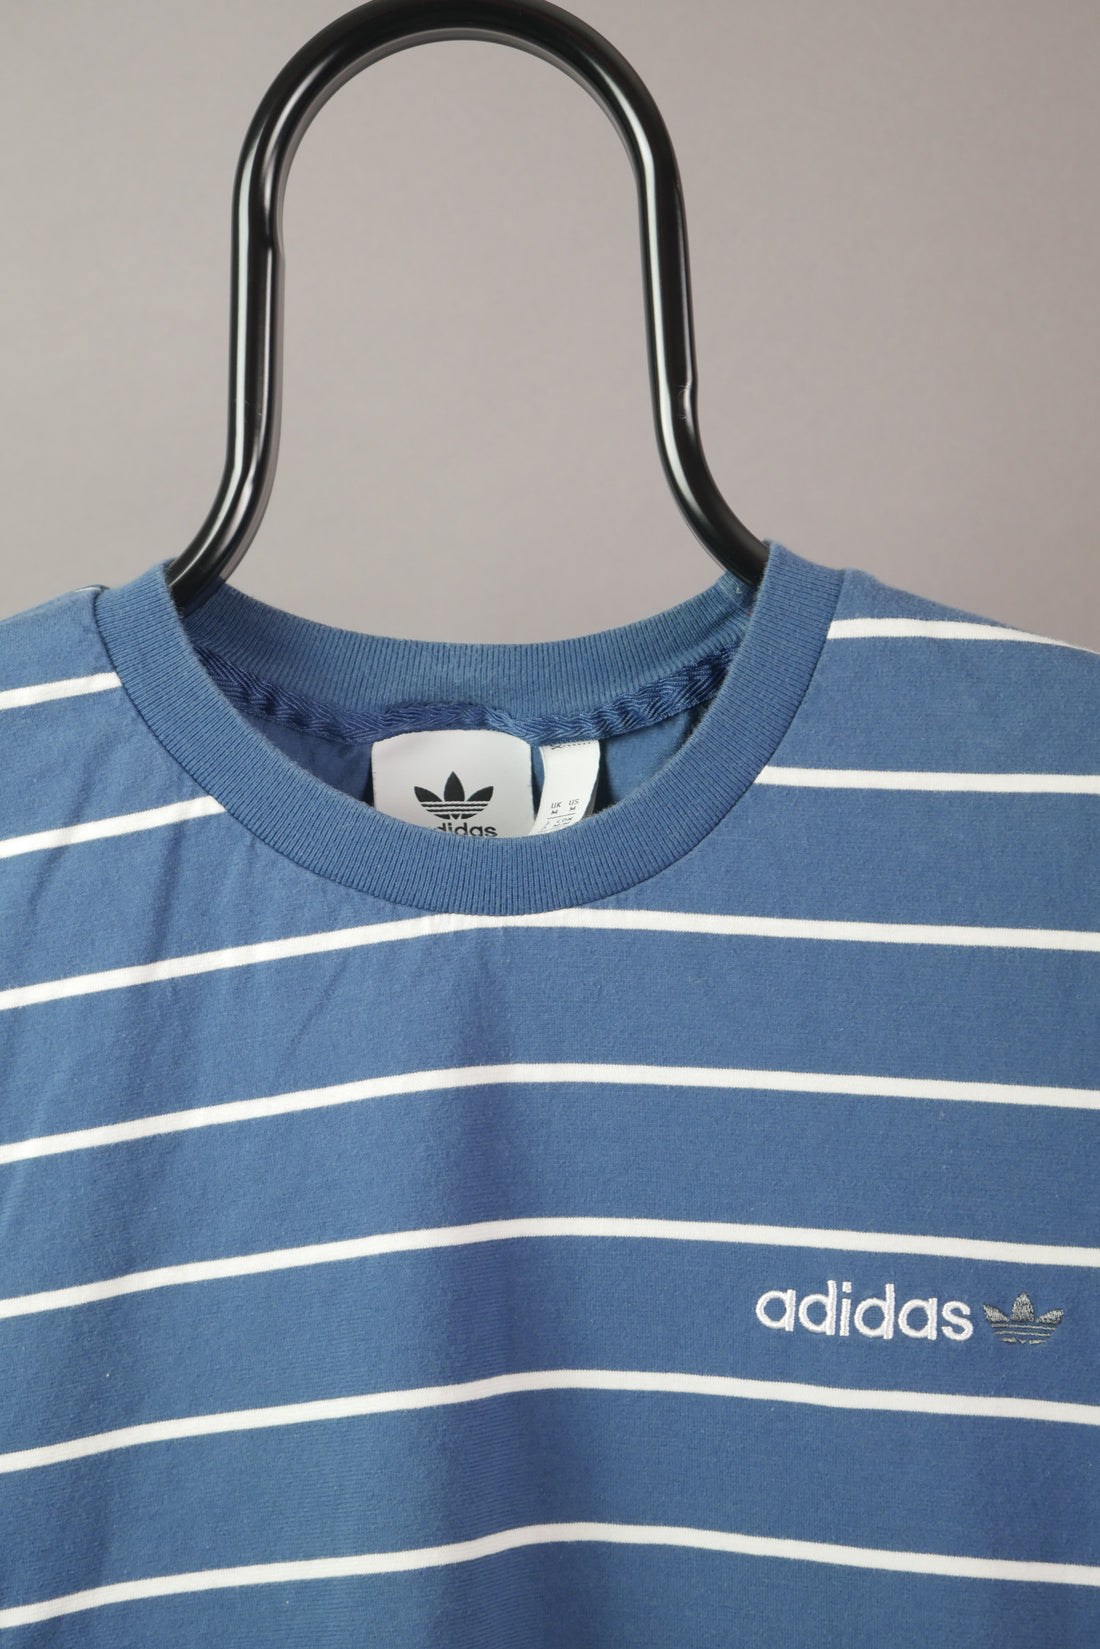 The Striped Adidas T-Shirt (M)